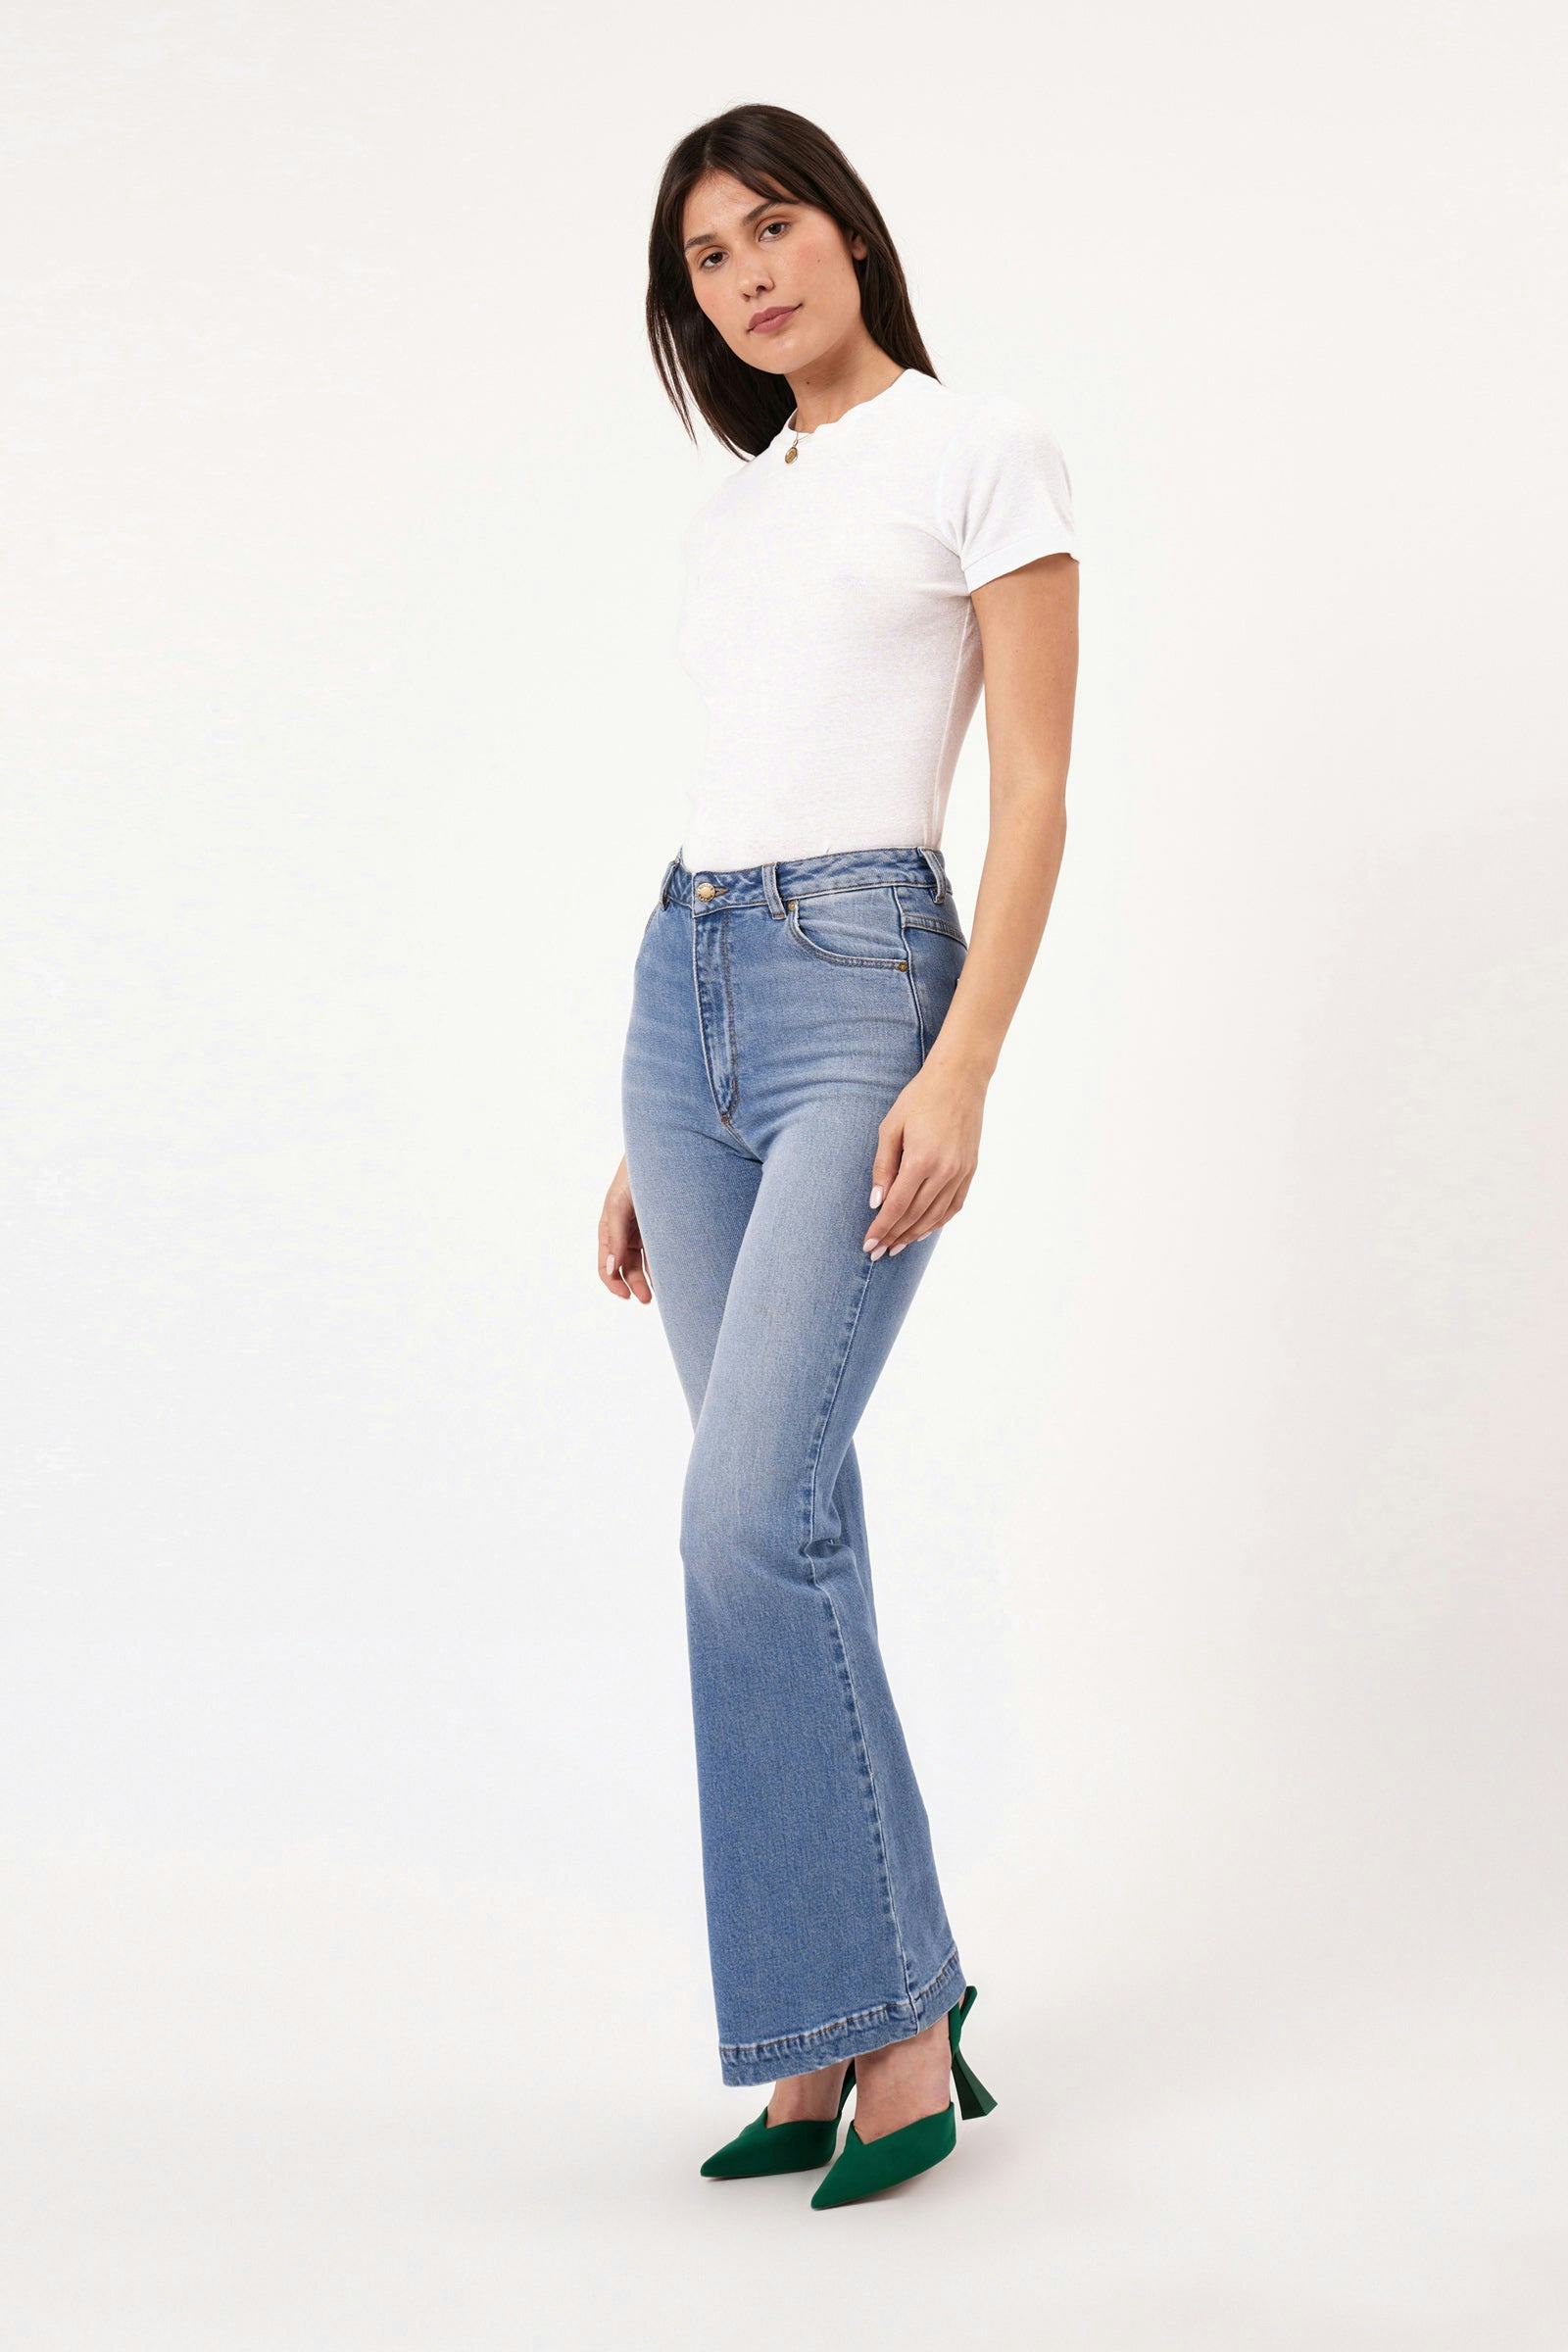 Buy Eastcoast Flare - Kate Online | Rollas Jeans